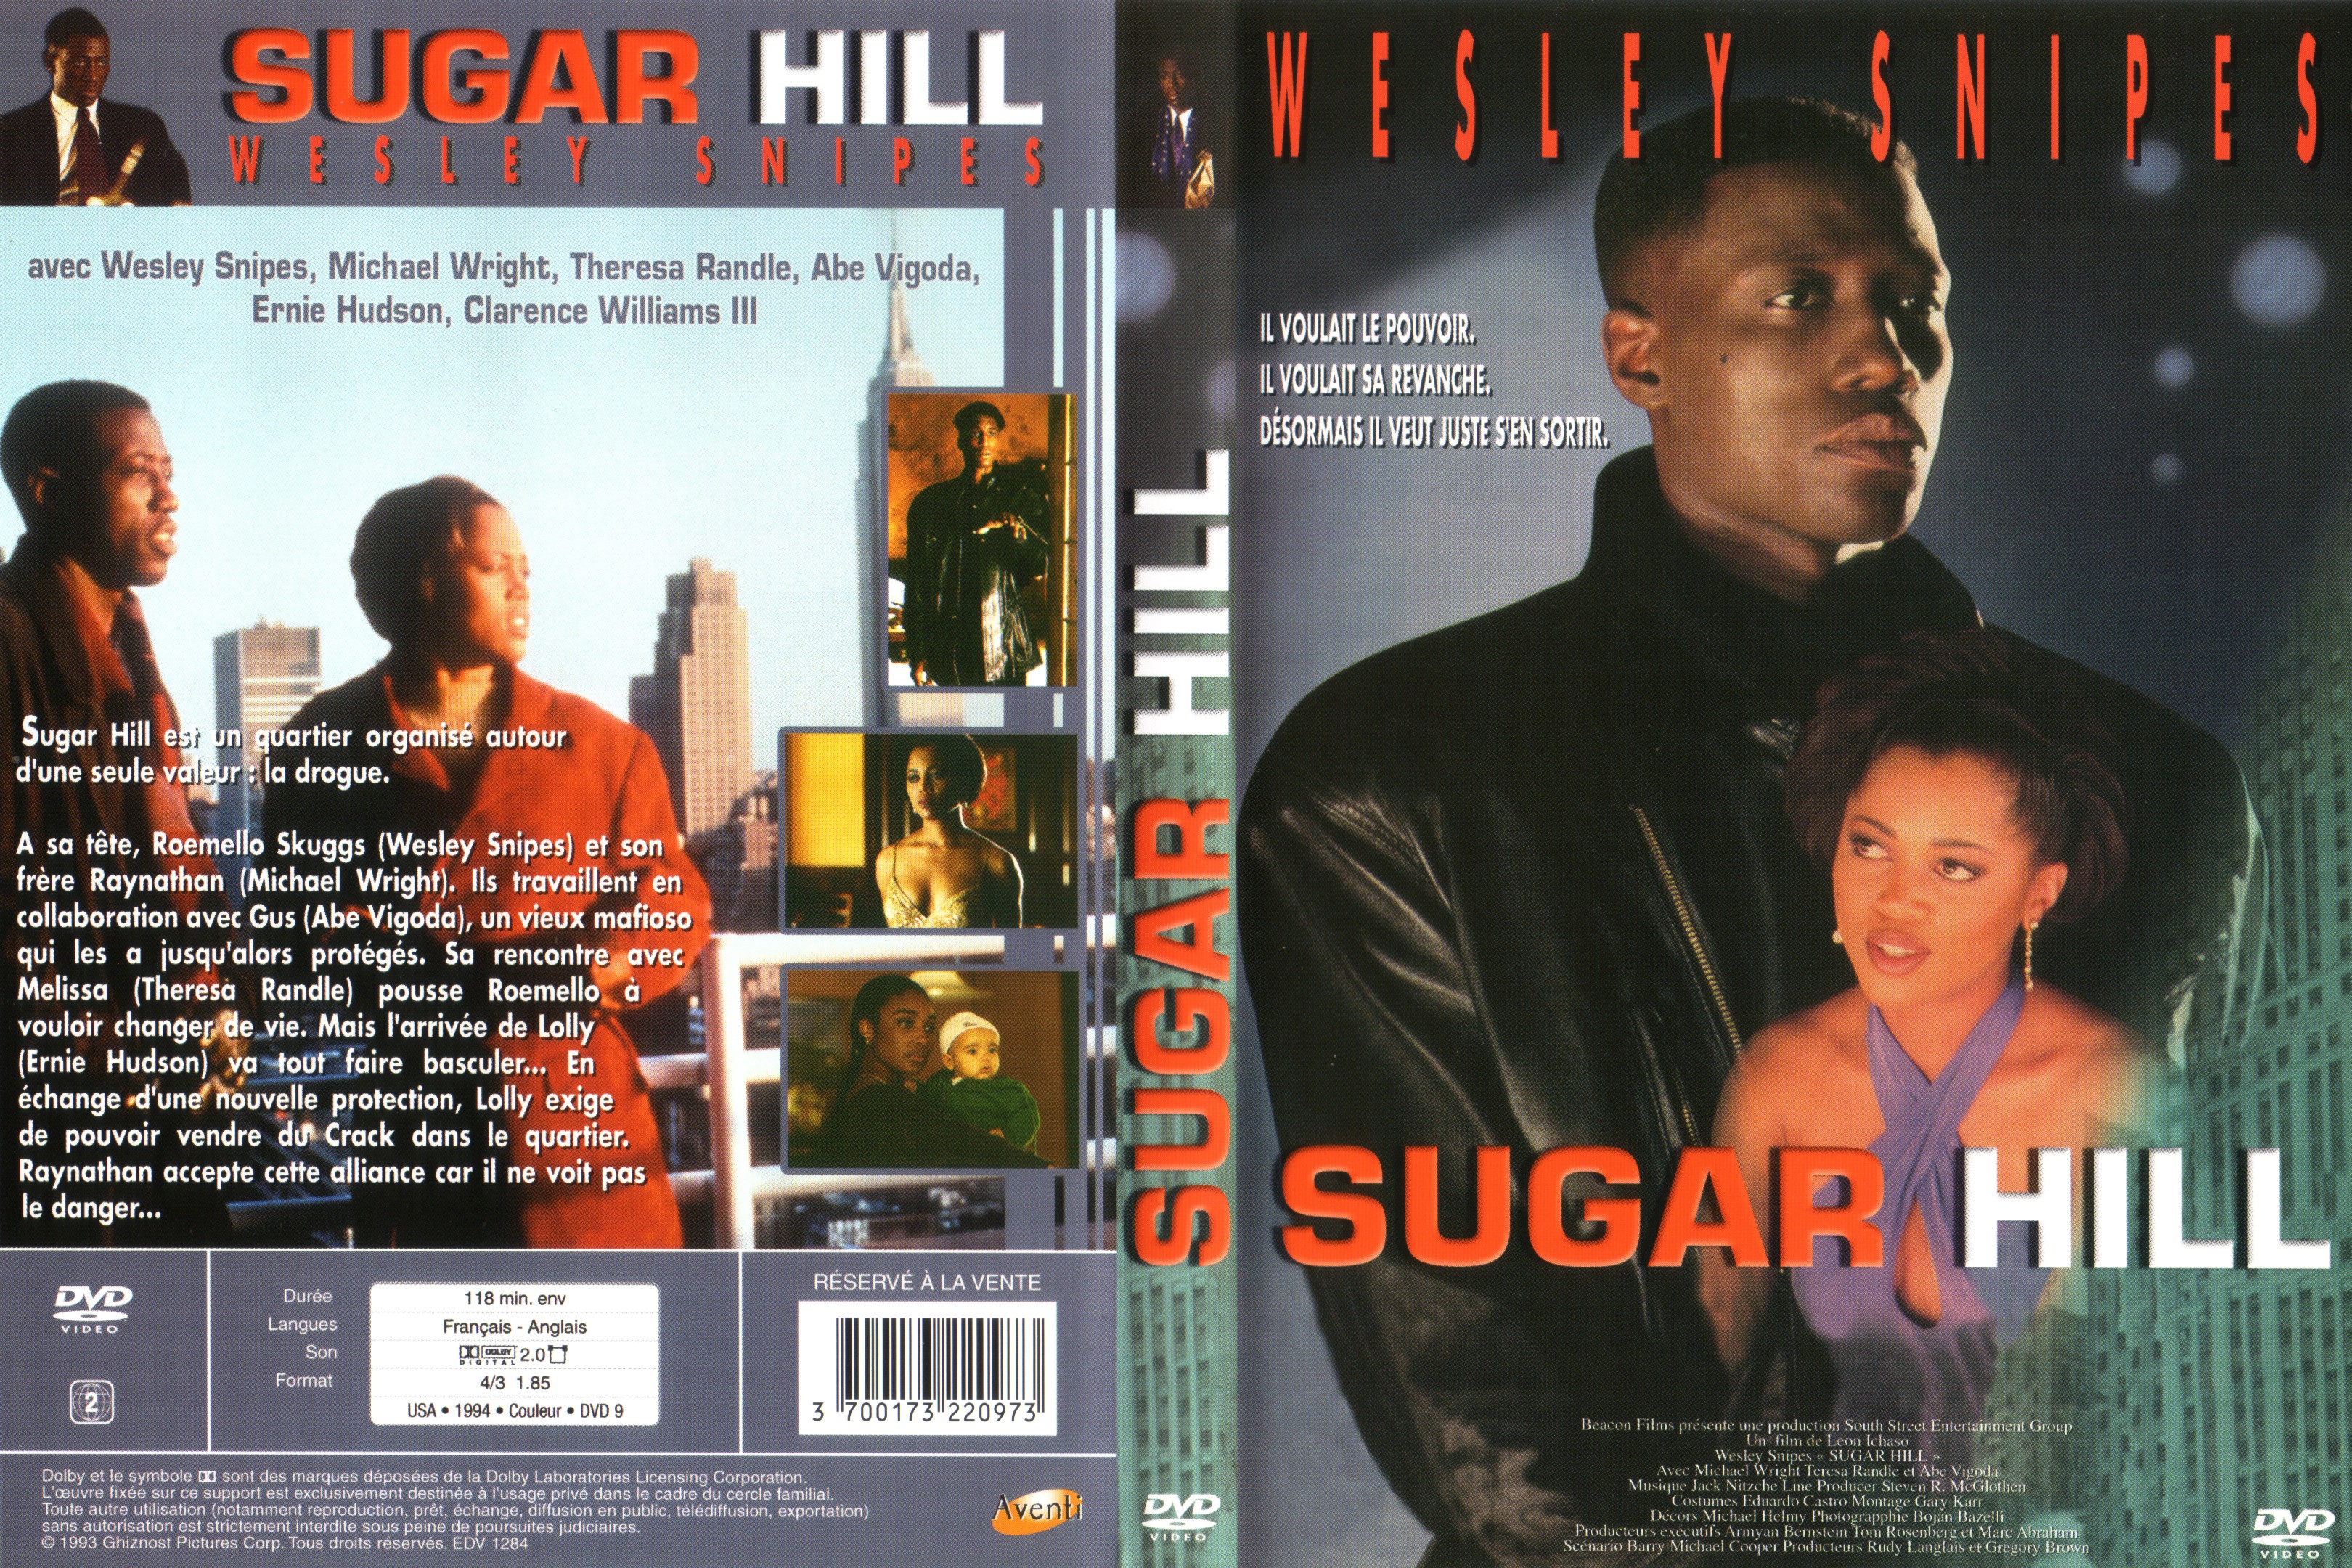 Jaquette DVD Sugar hill